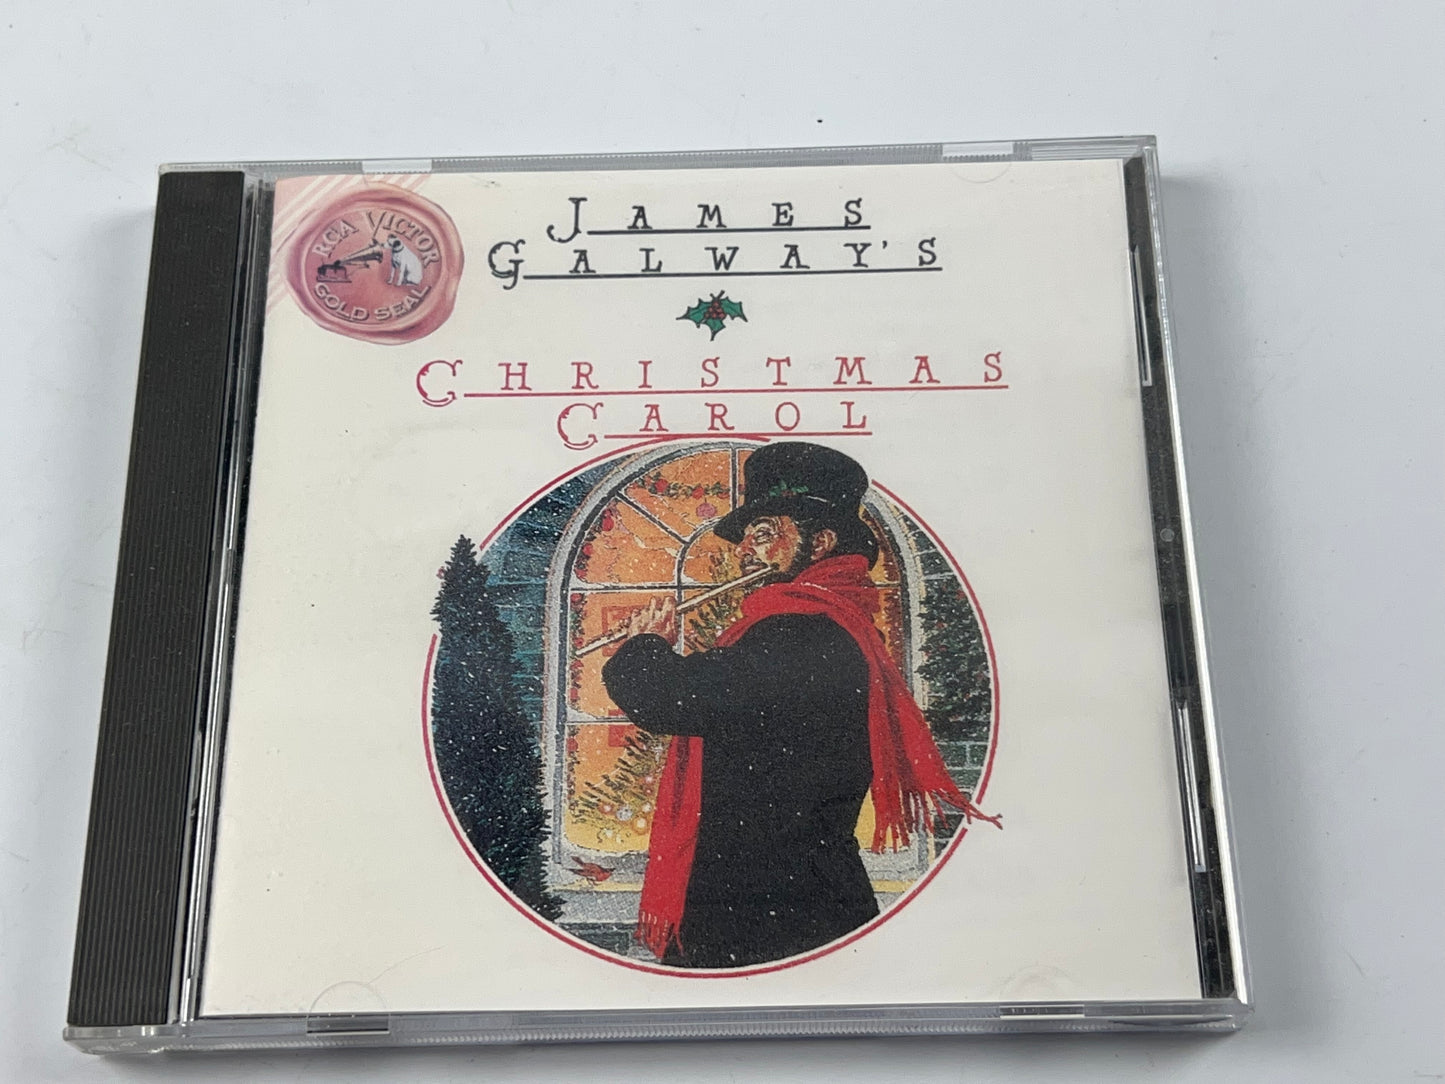 Le chant de Noël de James Galway - CD audio par Franz Xaver Gruber